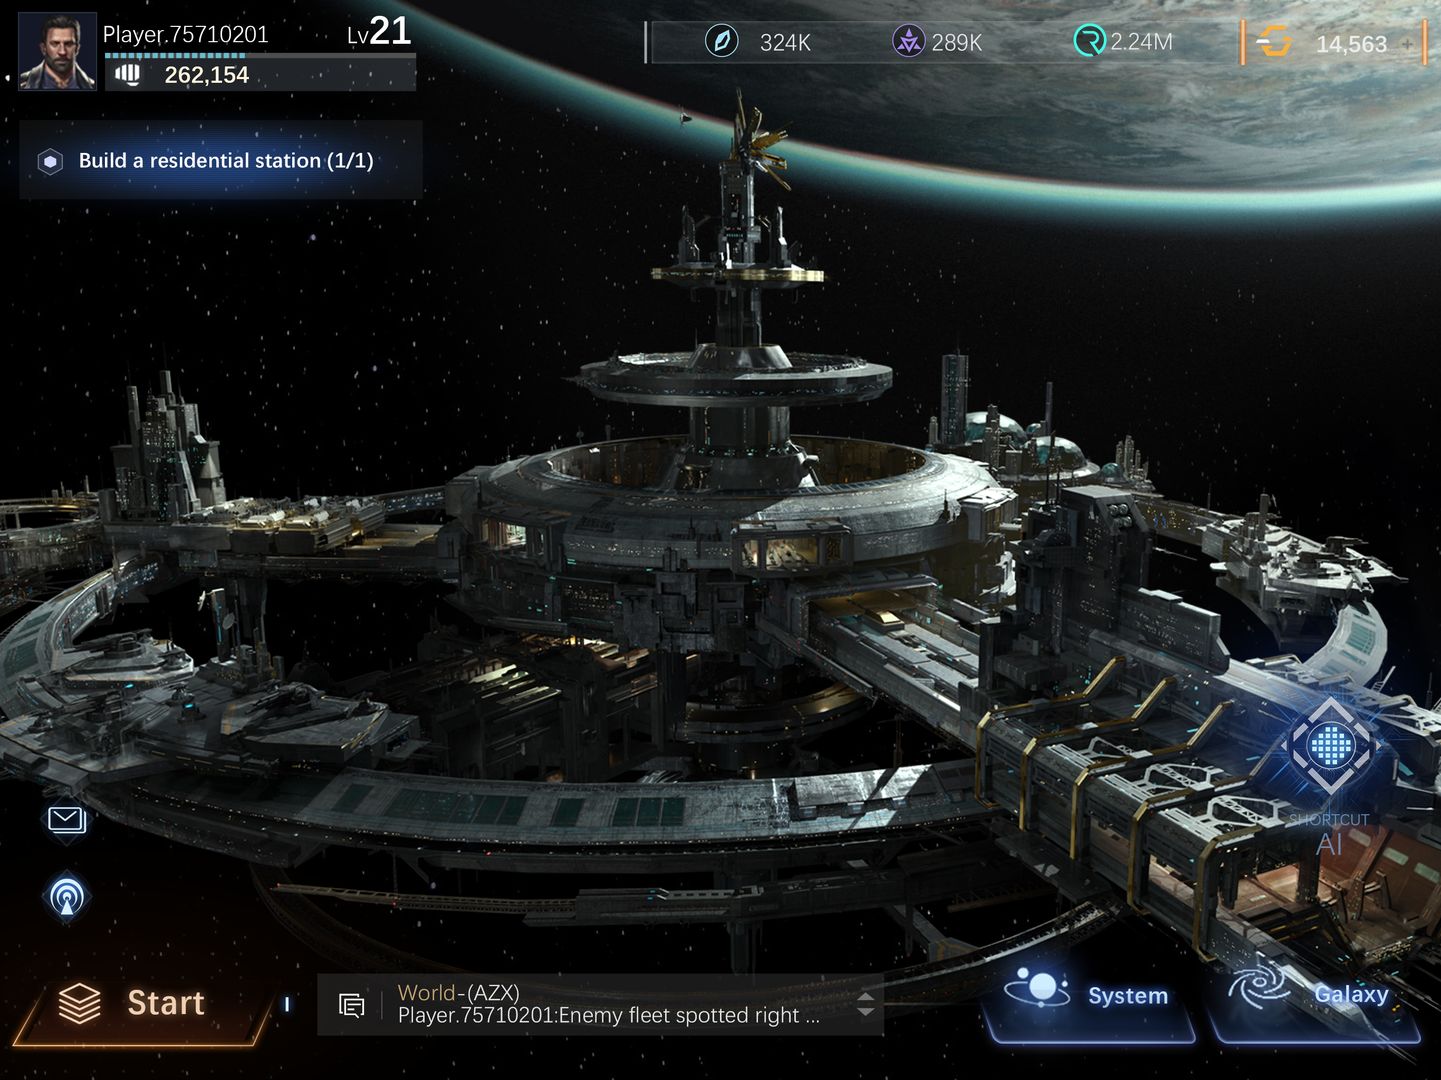 Screenshot of Nova: Iron Galaxy